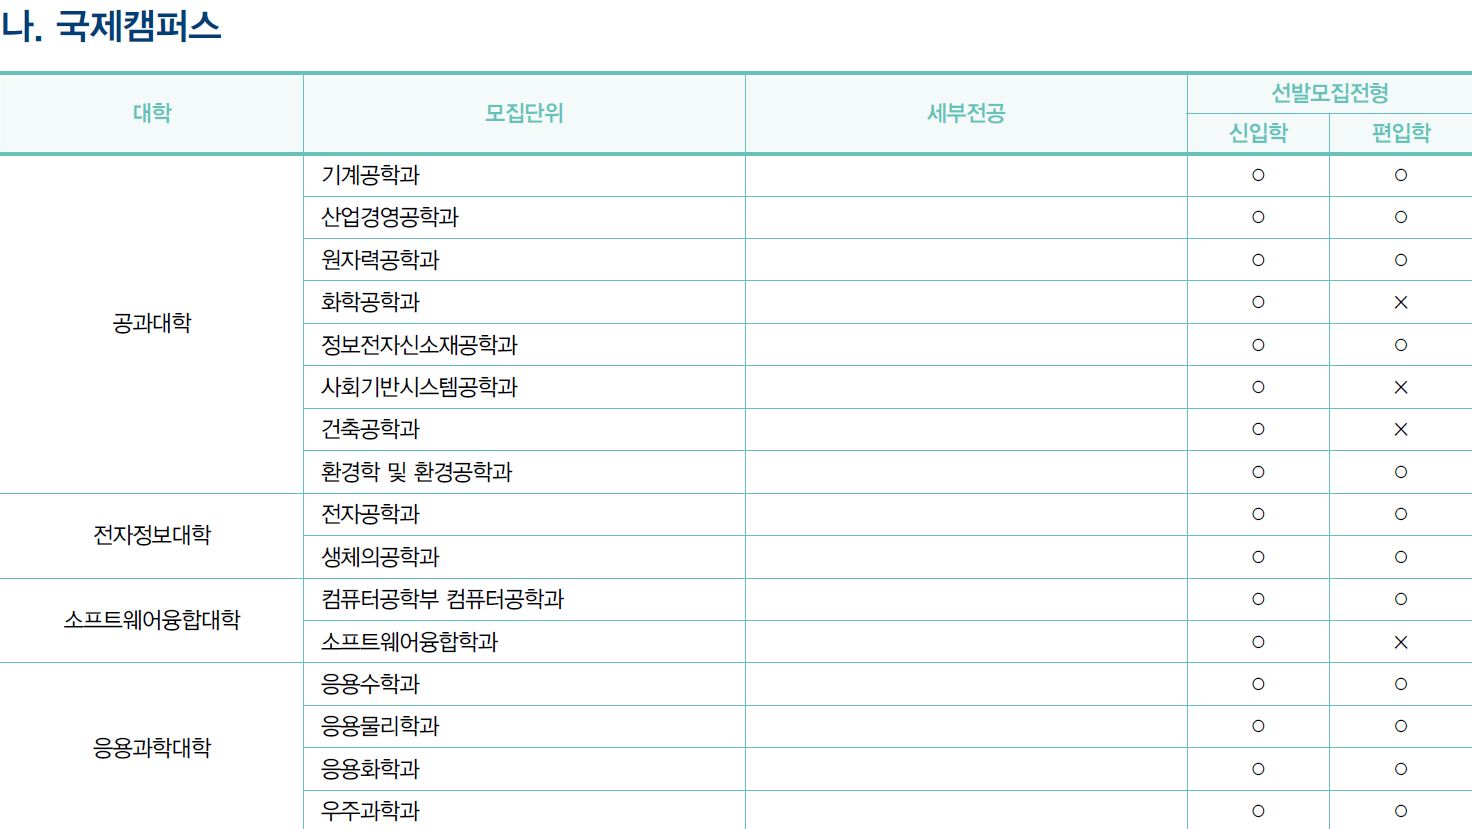 Kyung Hee University Foreign Student Admission Unit Eligibility Schedule_English Version 경희대 외국인전형 모집단위 지원자격 전형일정_영어본_03_모집단위.JPG